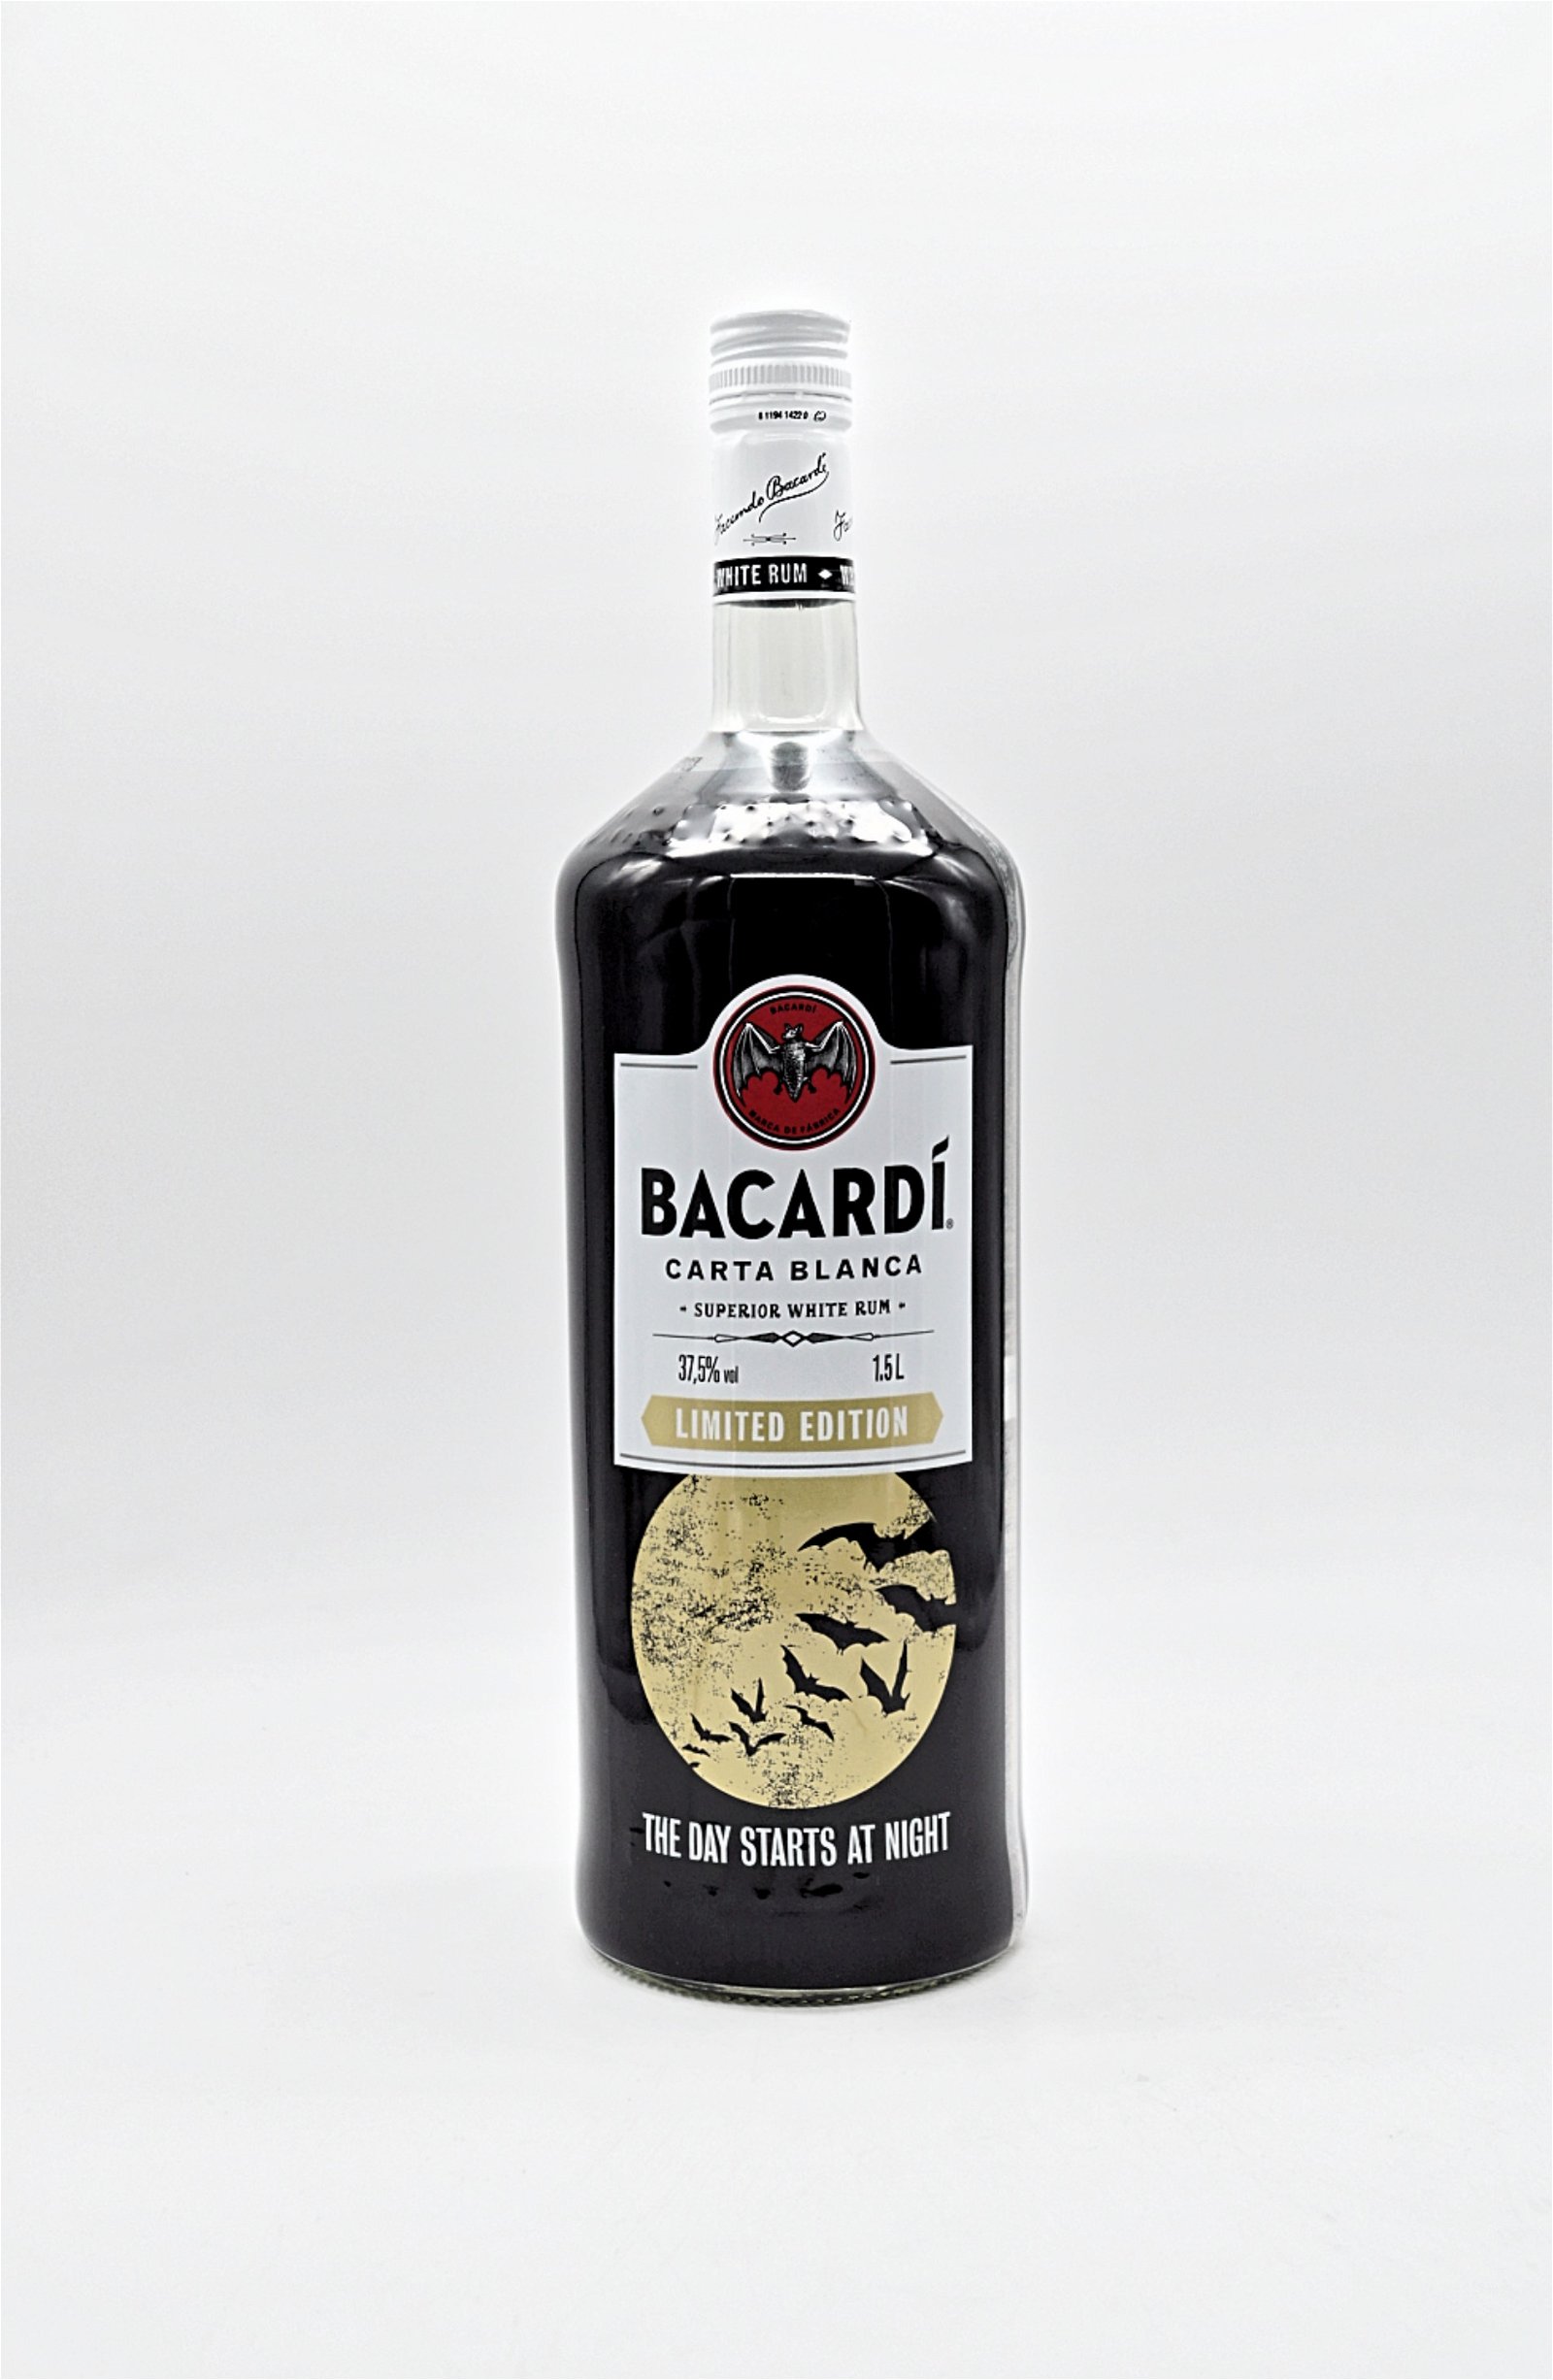 Bacardi Carta Blanca Superior White Rum Limited Edition